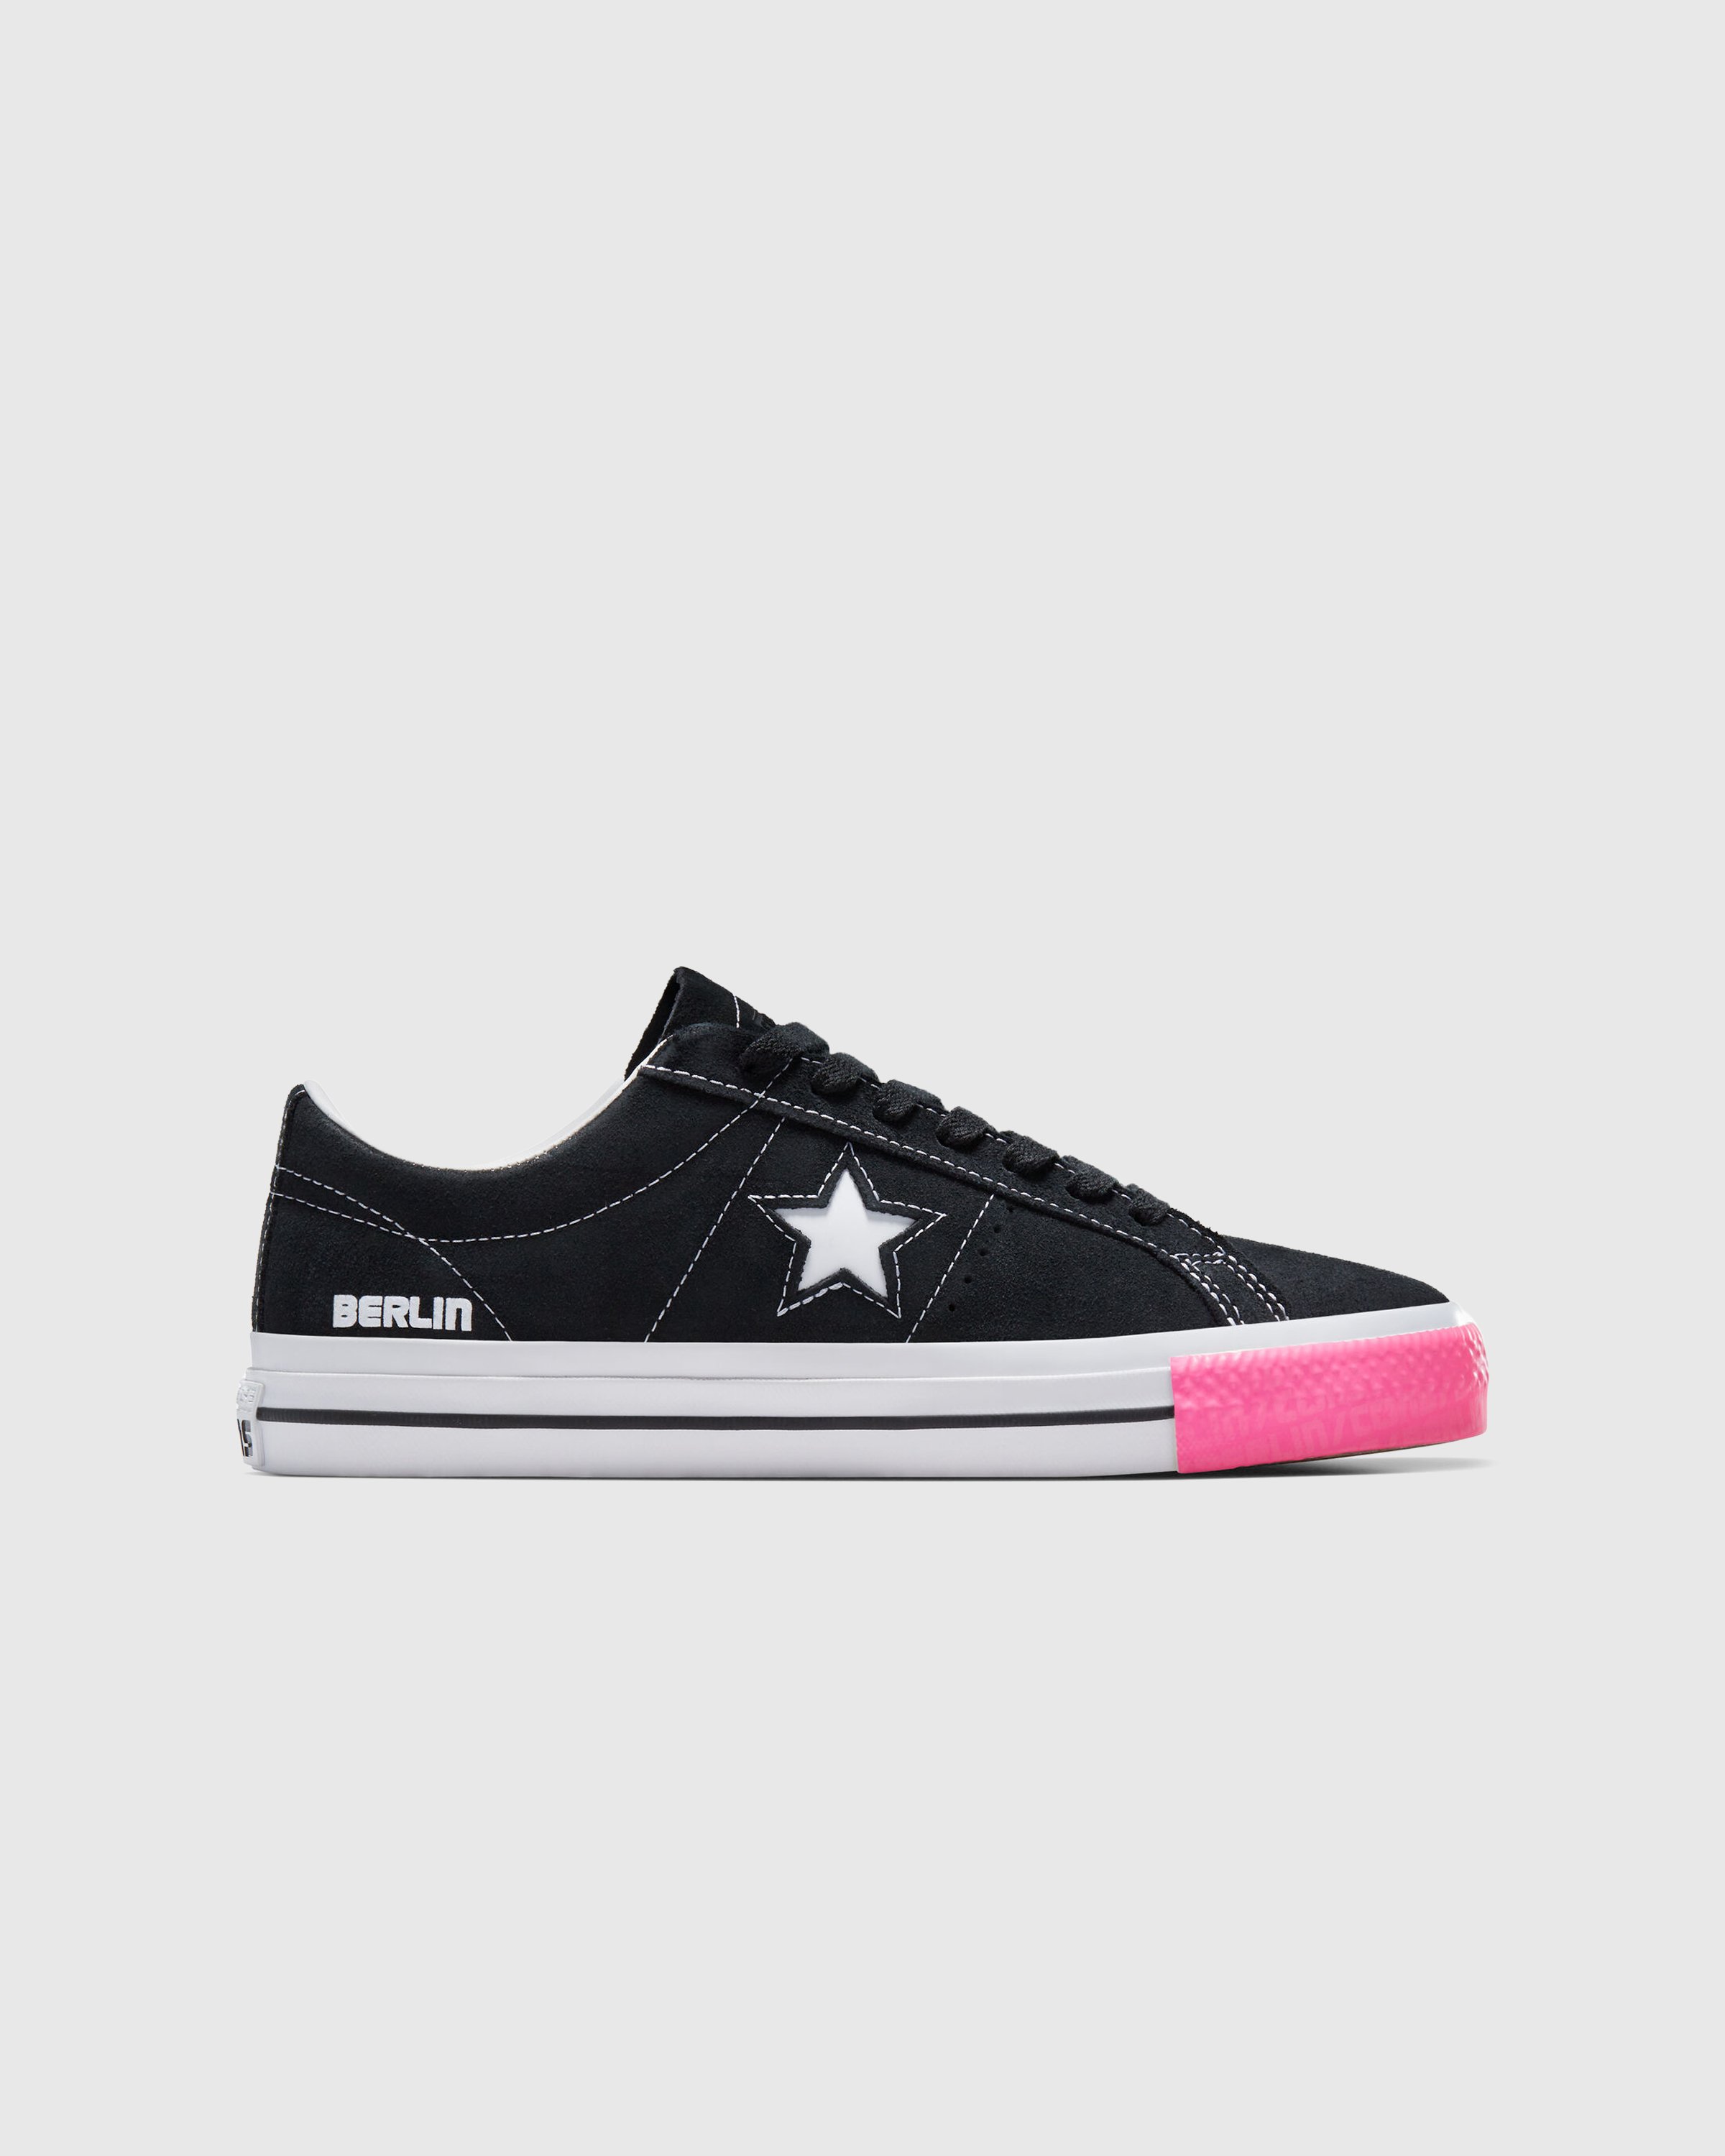 Converse - One Star Pro Berlin Black/Pink - Footwear - Black - Image 1